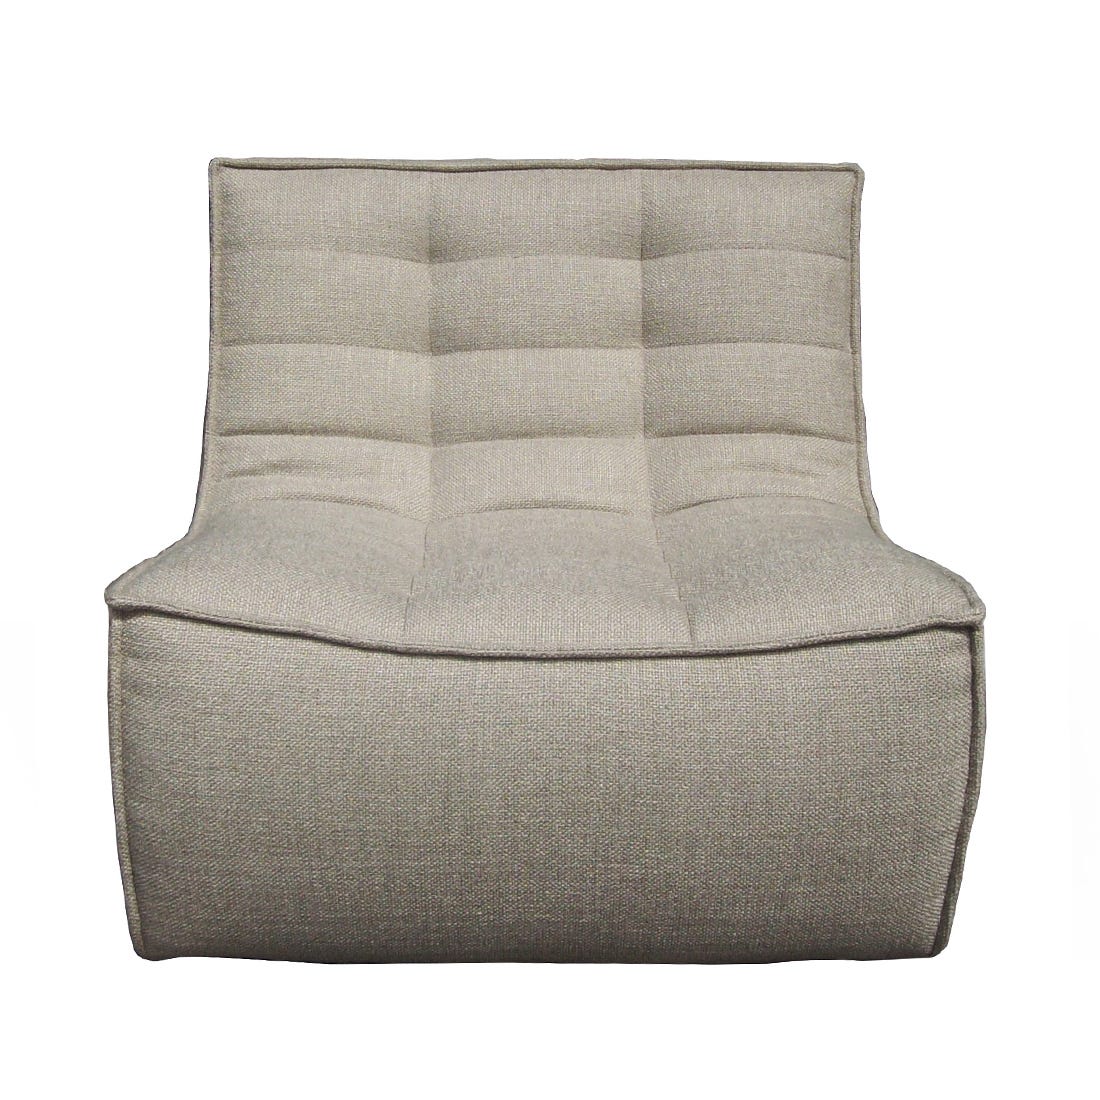 Ethnicraft Slouch Sofa Chair - GlobeWest